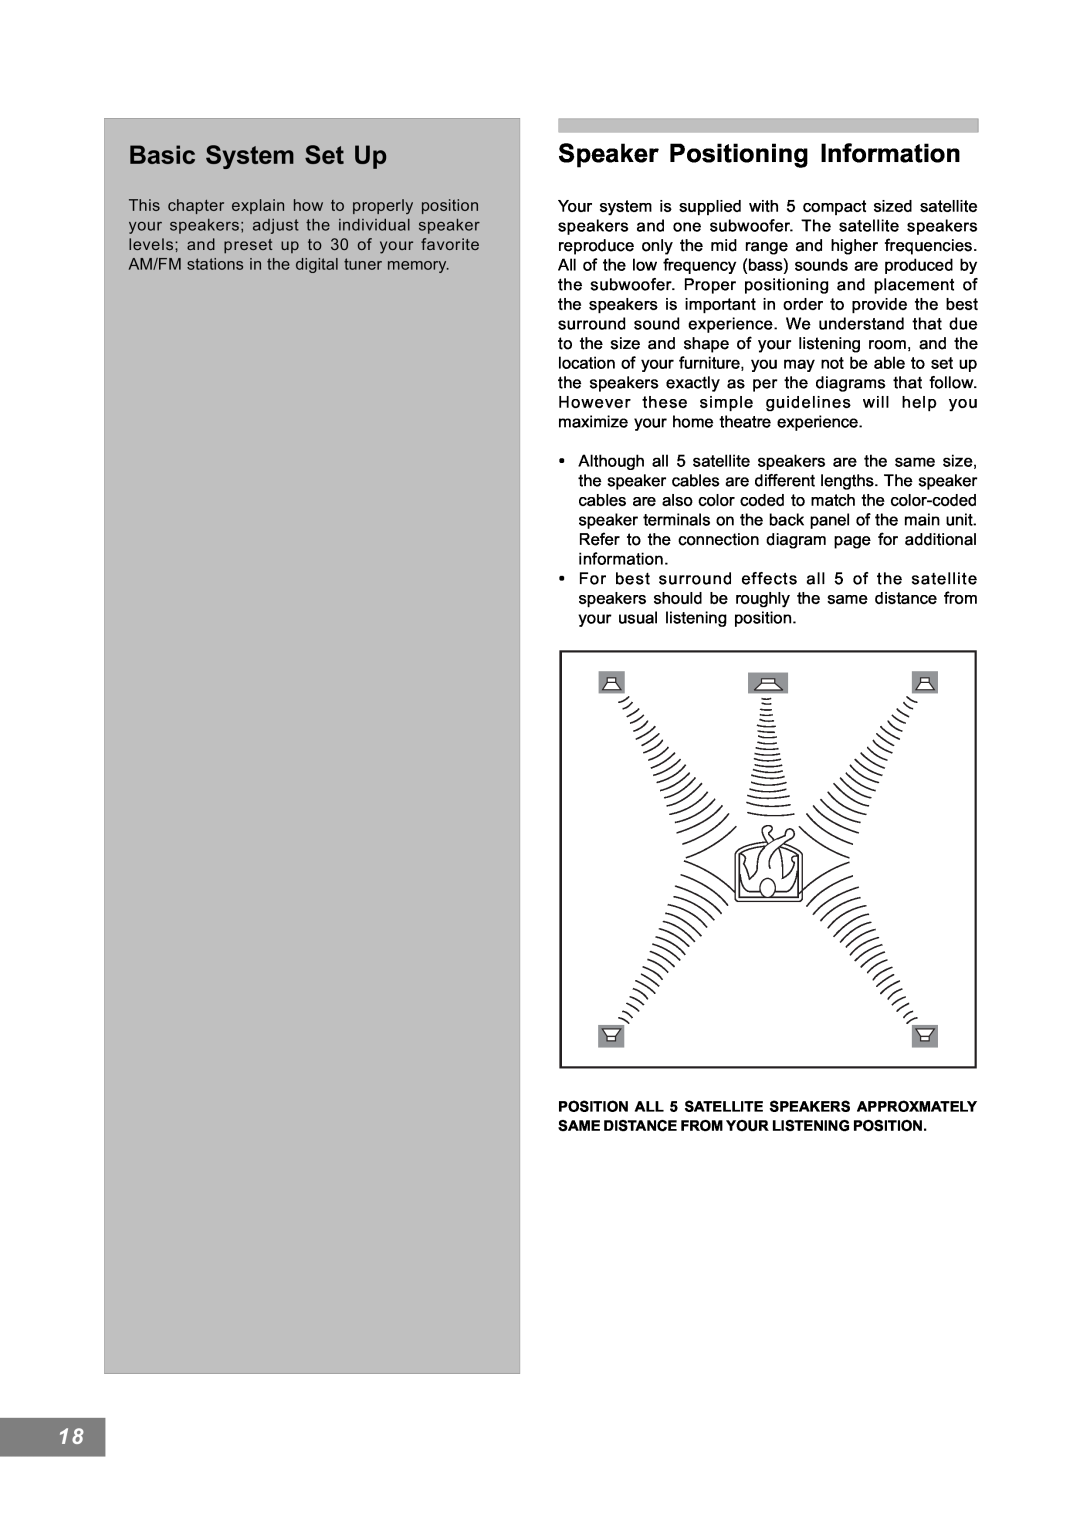 Emerson AV101 manual Basic System Set Up, Speaker Positioning Information 